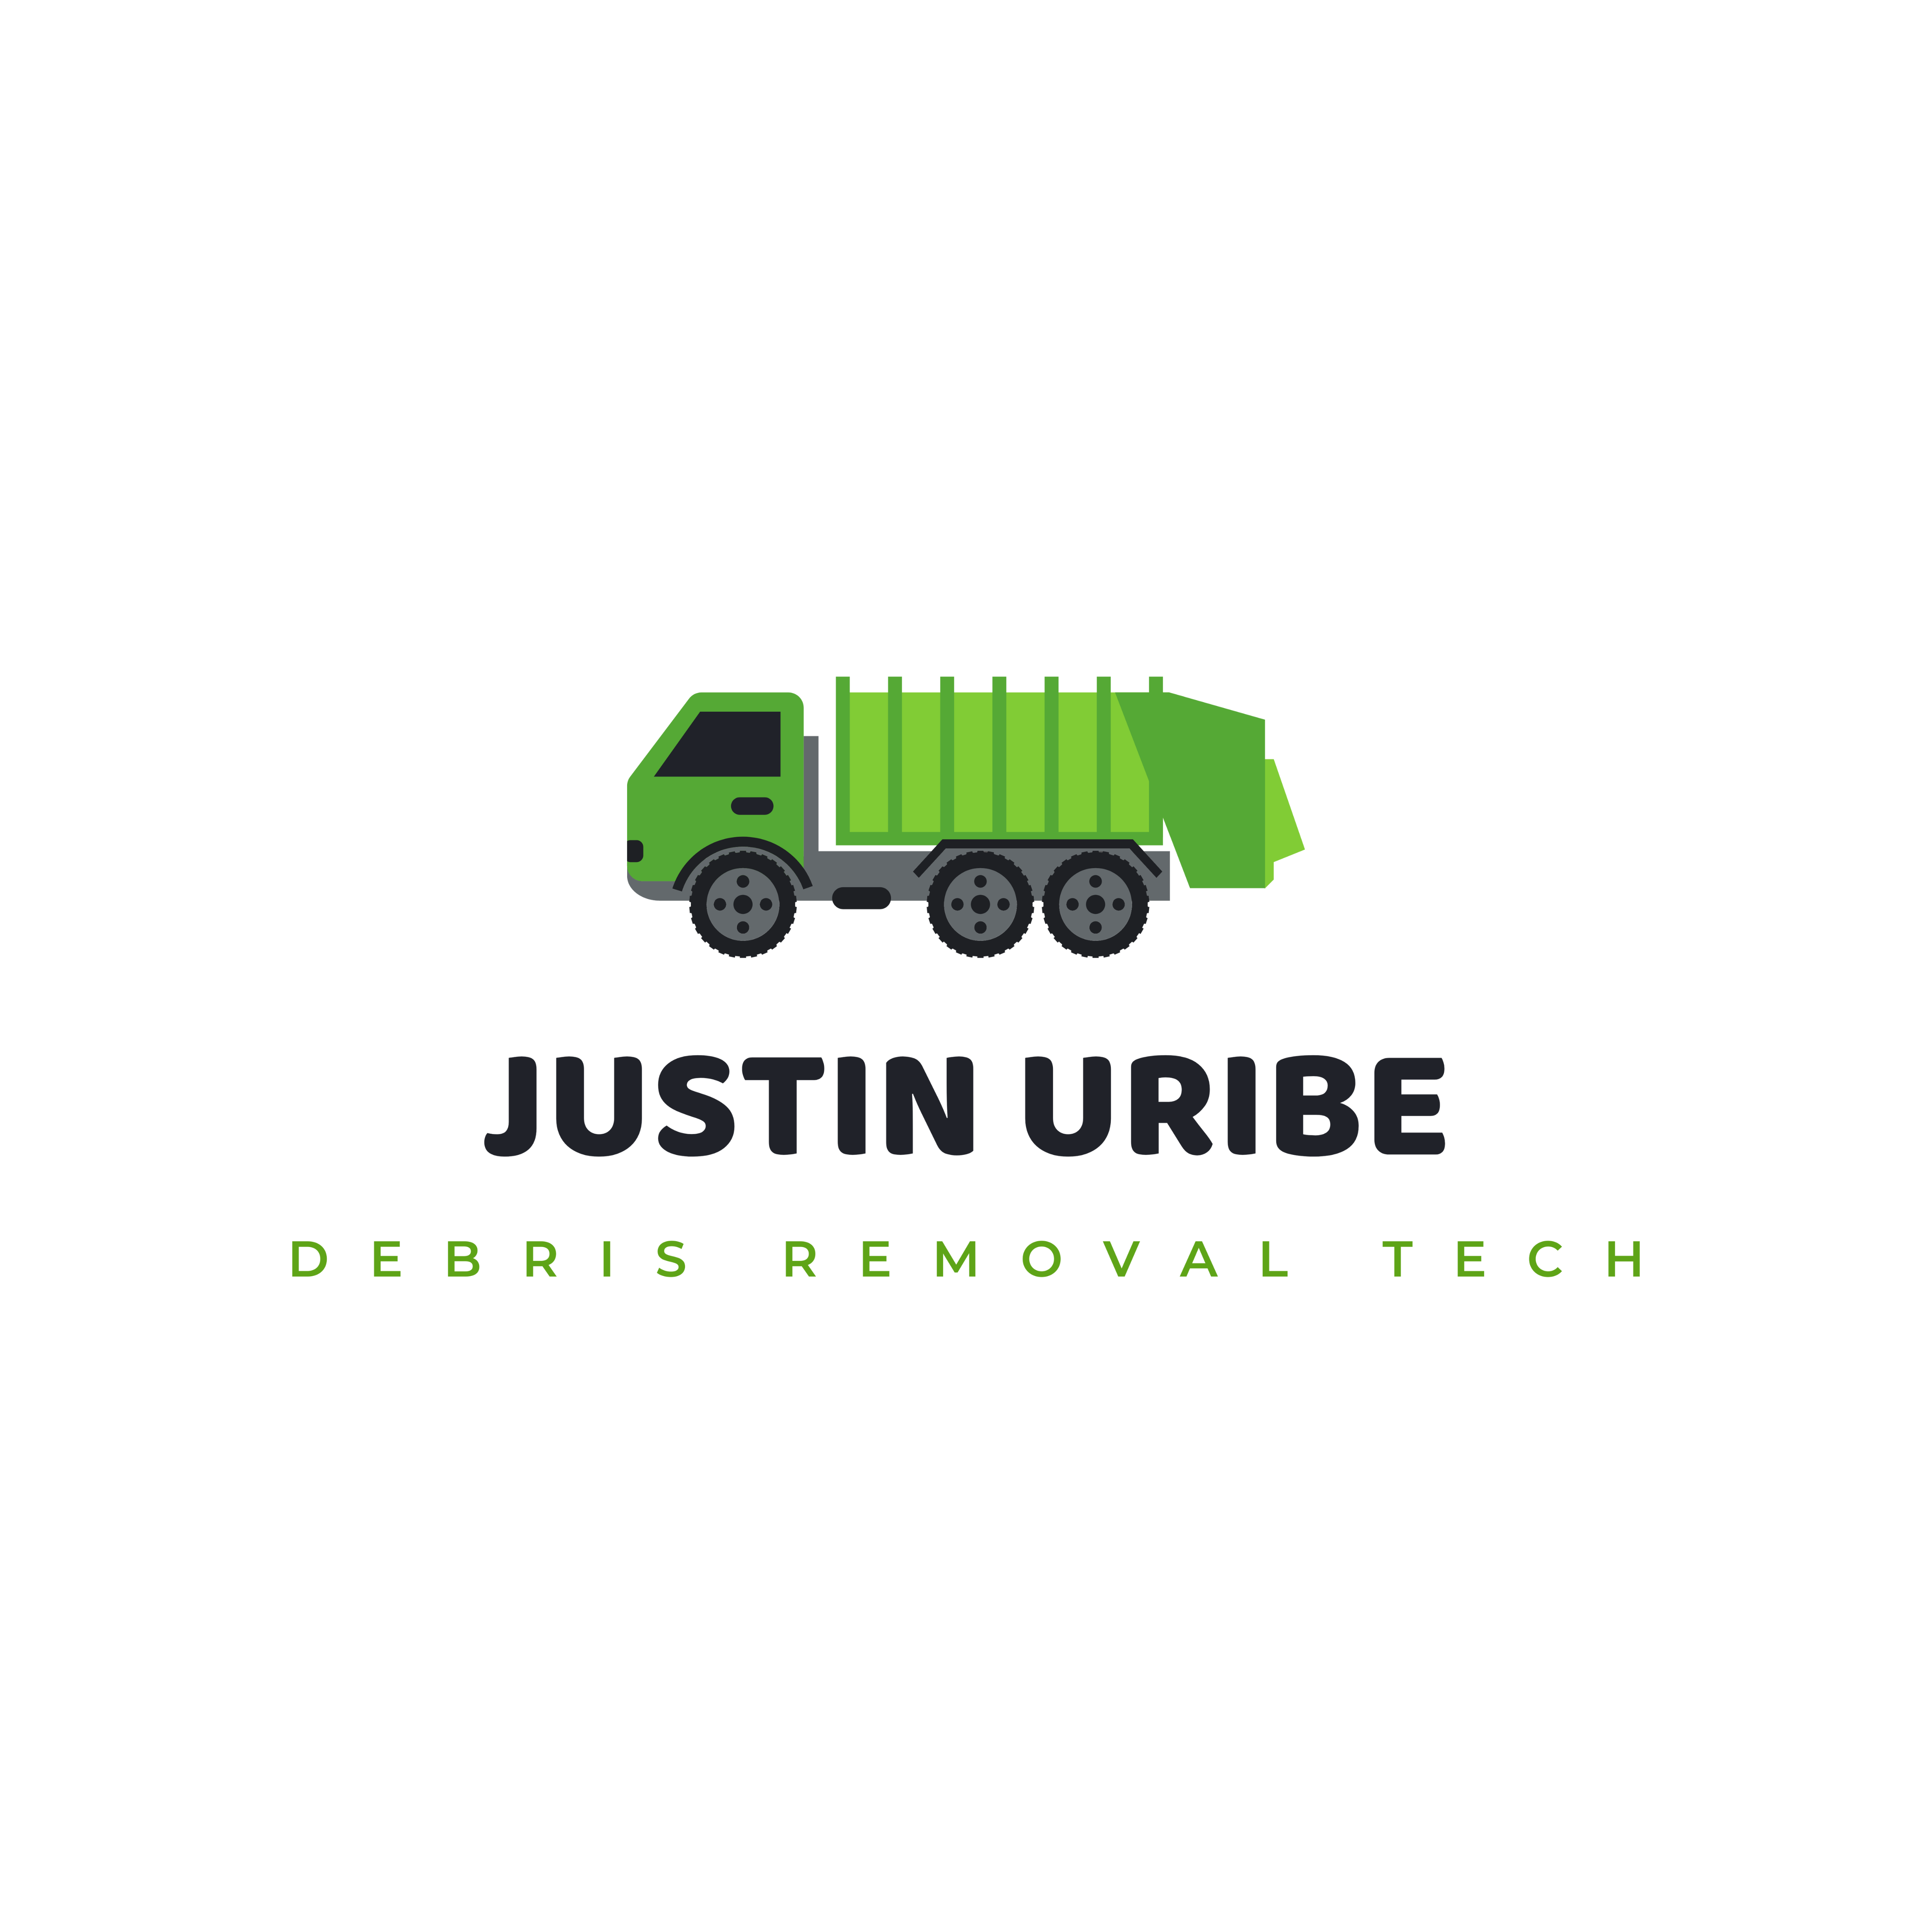 Justin Uribe Debris Removal Tech review